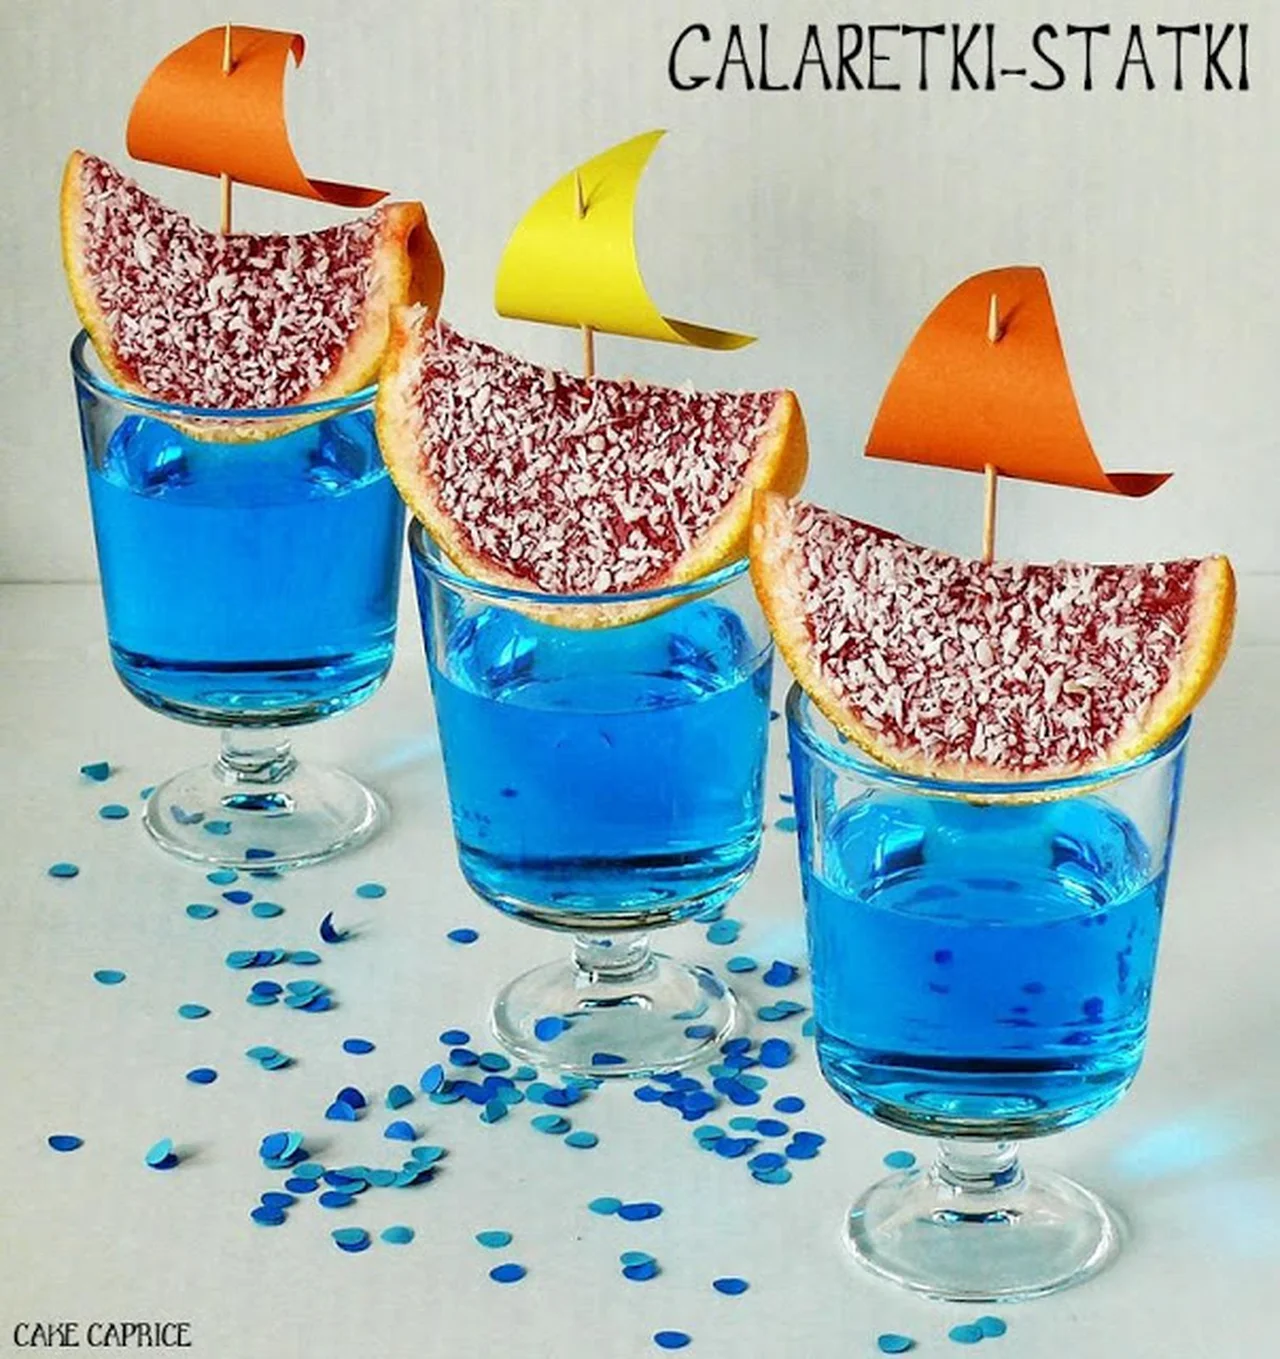 Galaretki-statki CakeCaprice